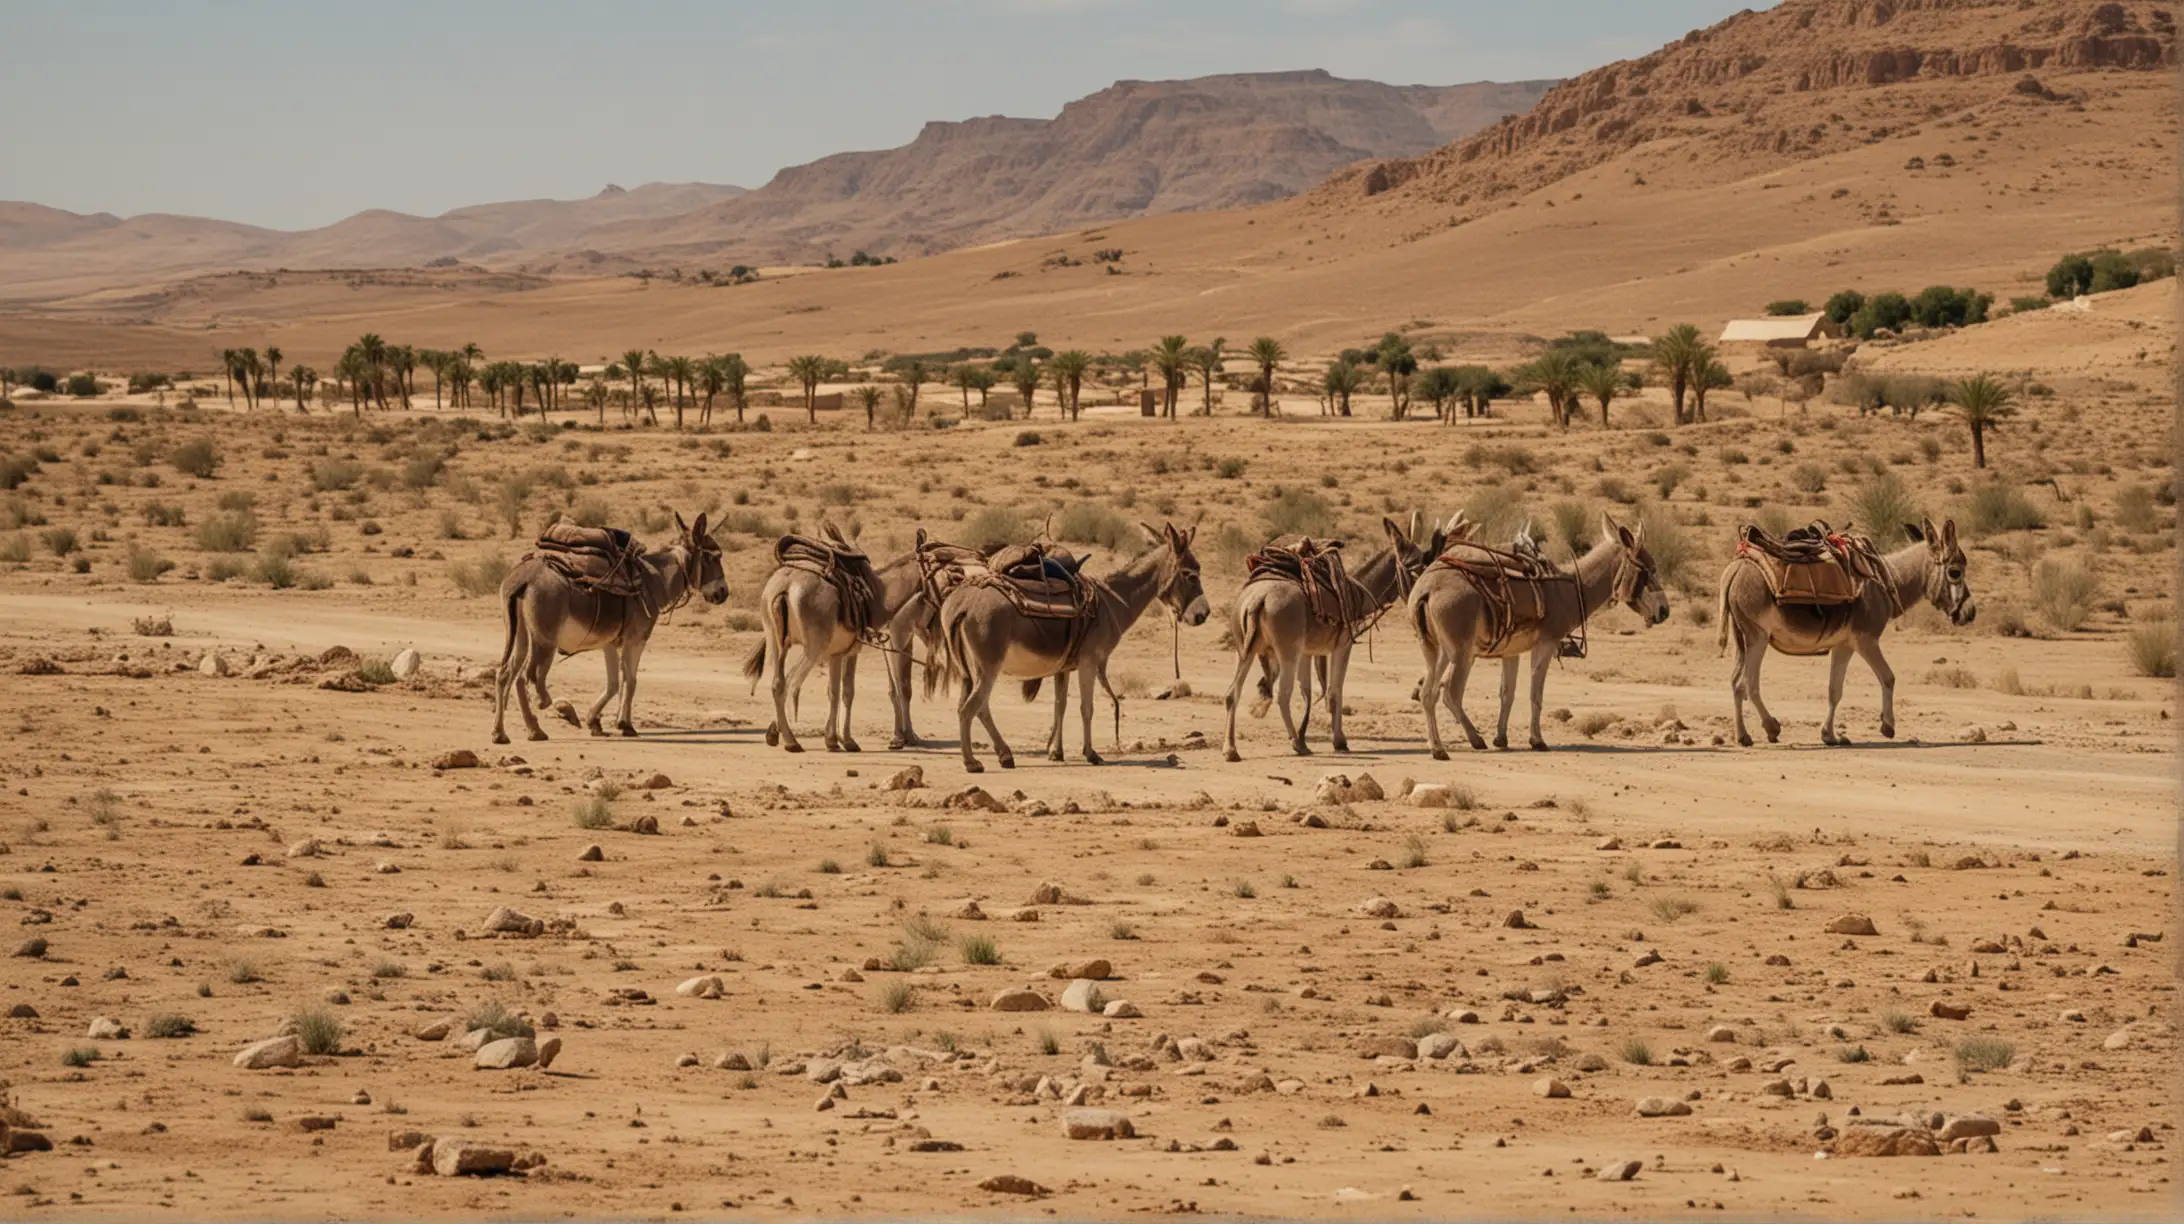 Biblical Era Scene Donkeys and People in the Desert